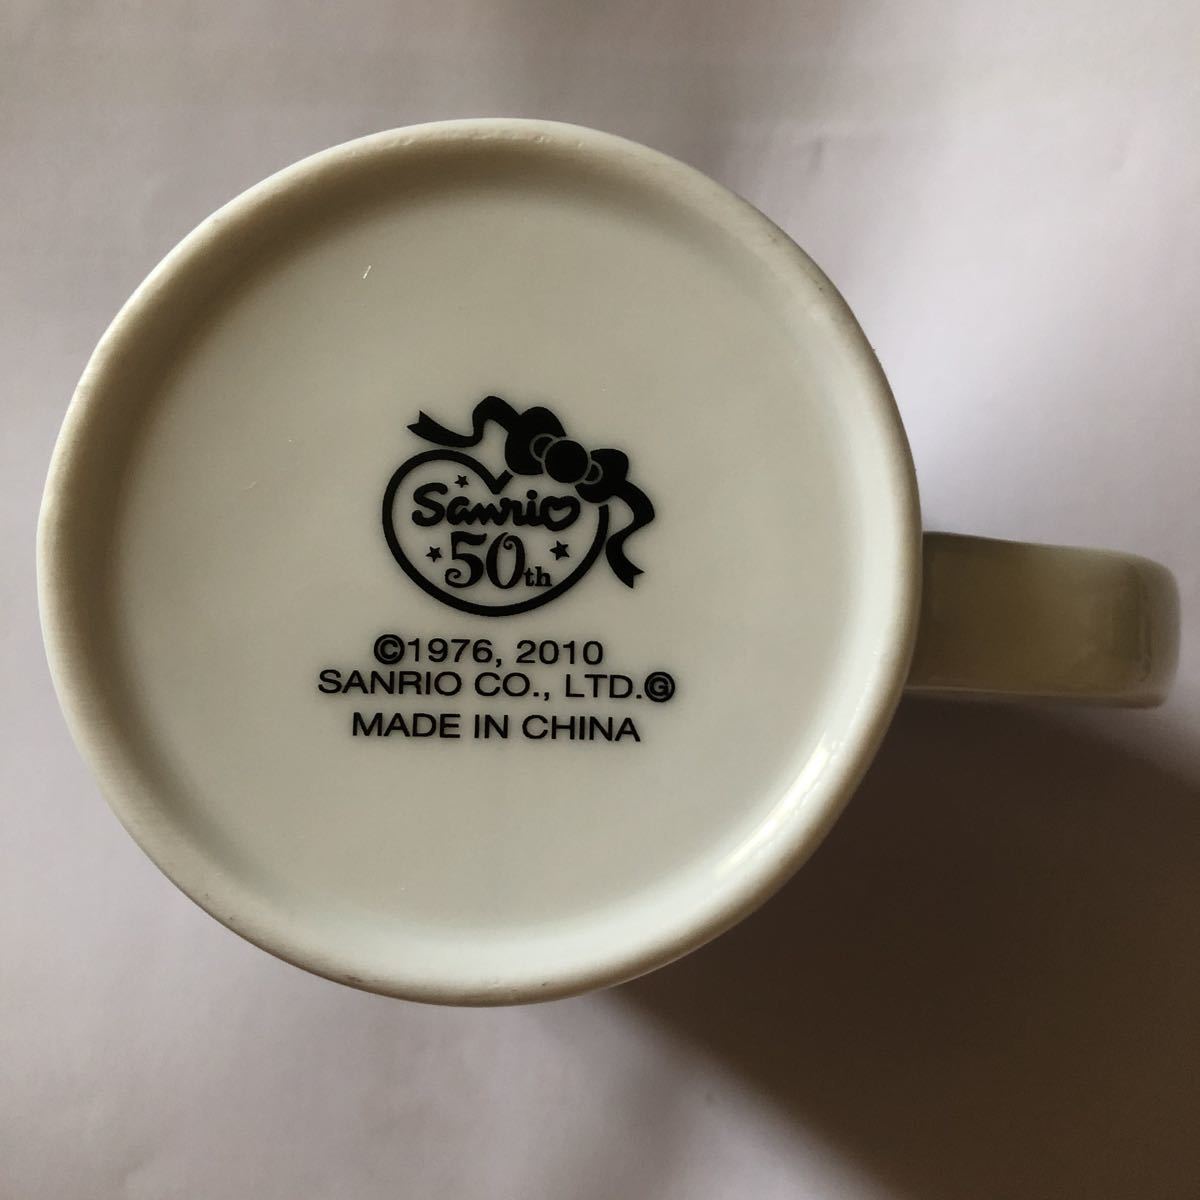  ultra rare goods Sanrio 50 anniversary commemoration 2010 year made Hello Kitty retro pattern ceramics mug 